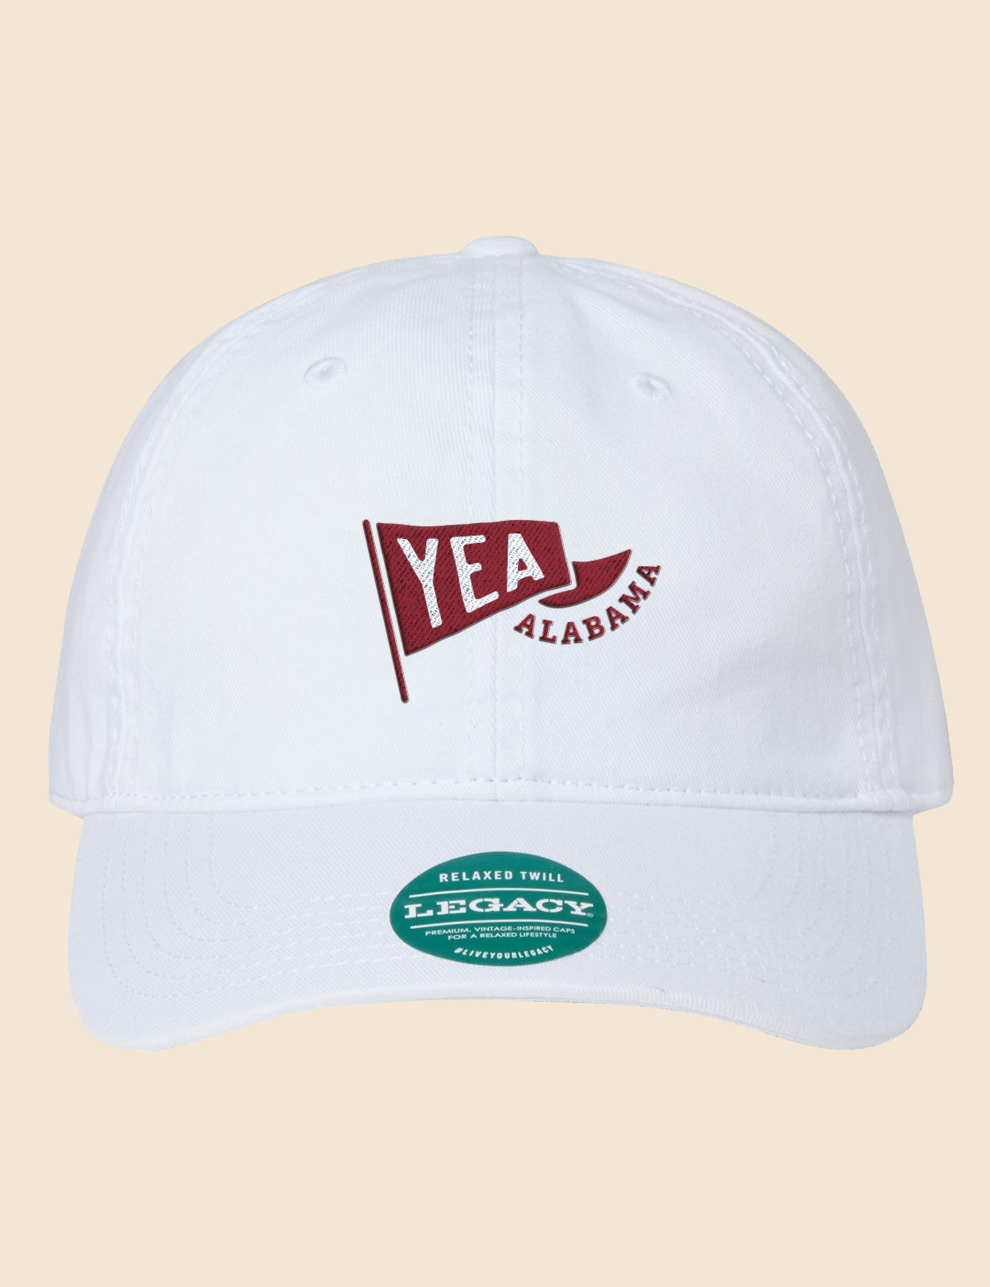 Yea Alabama Original Cotton Cap